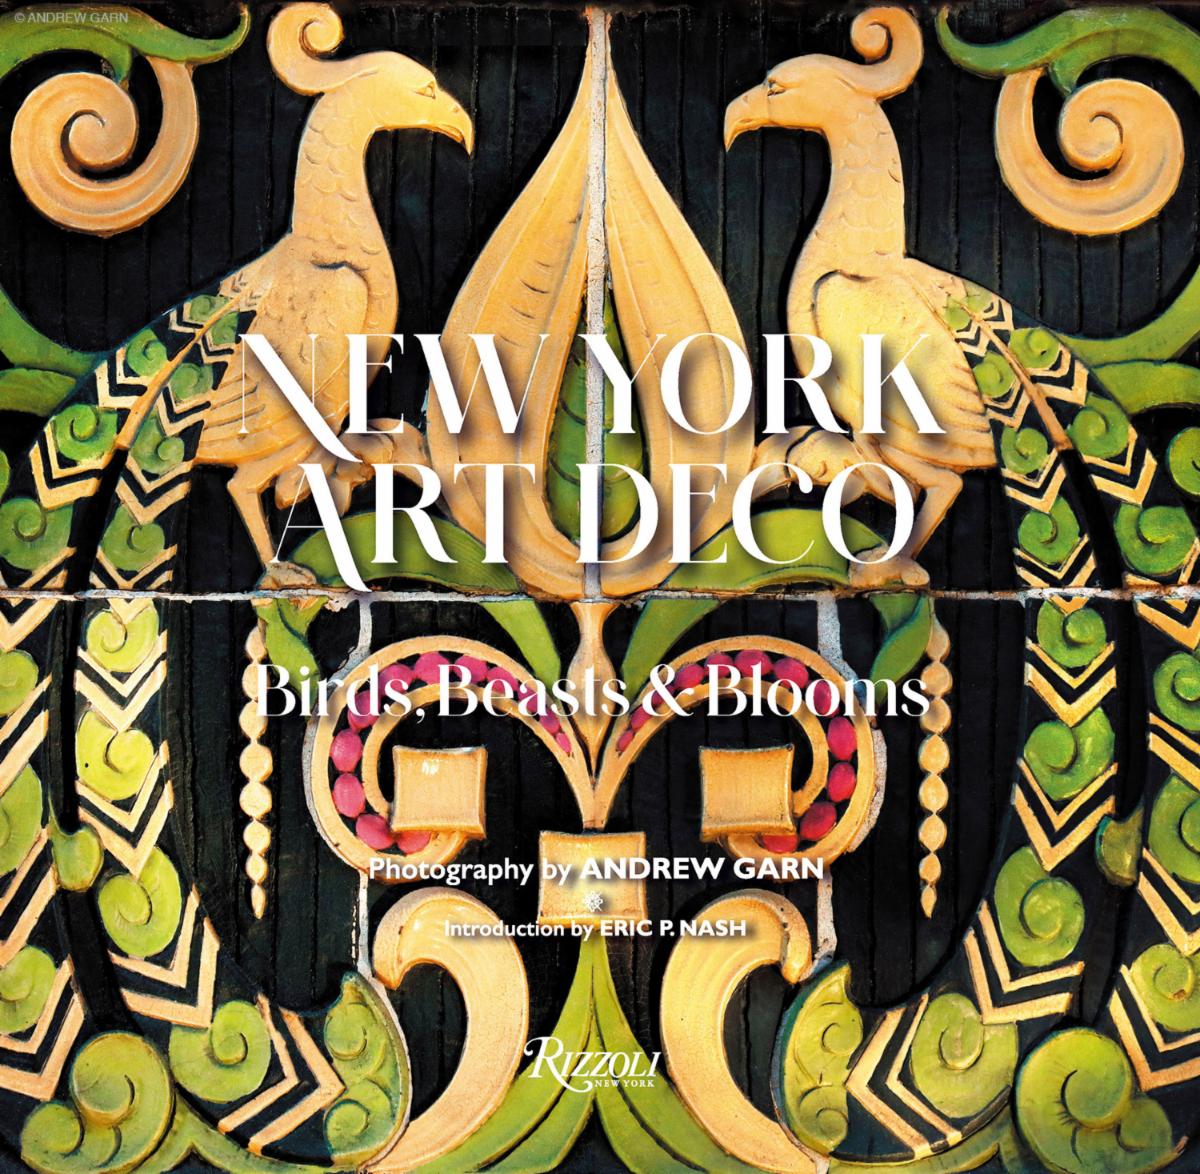 Landmark Lecture - New York Art Deco: Birds, Beasts & Blooms | New York ...